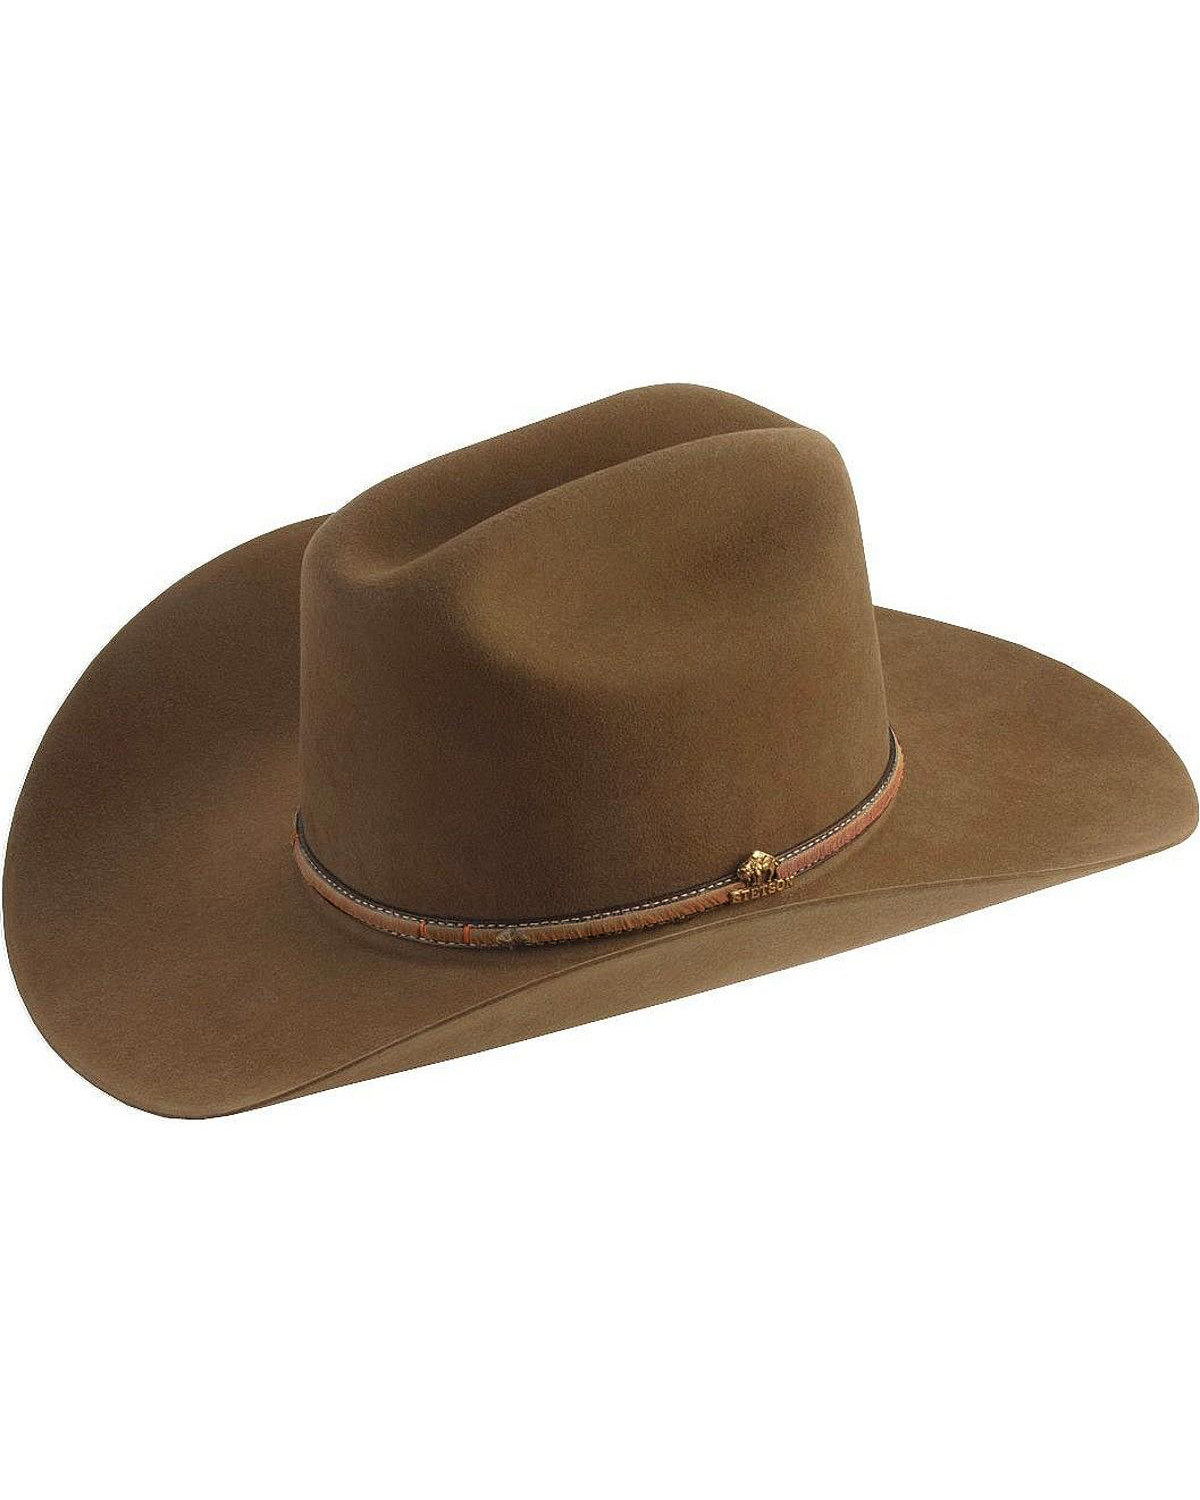 Stetson Powder River 4X Buffalo Fur Felt Hat